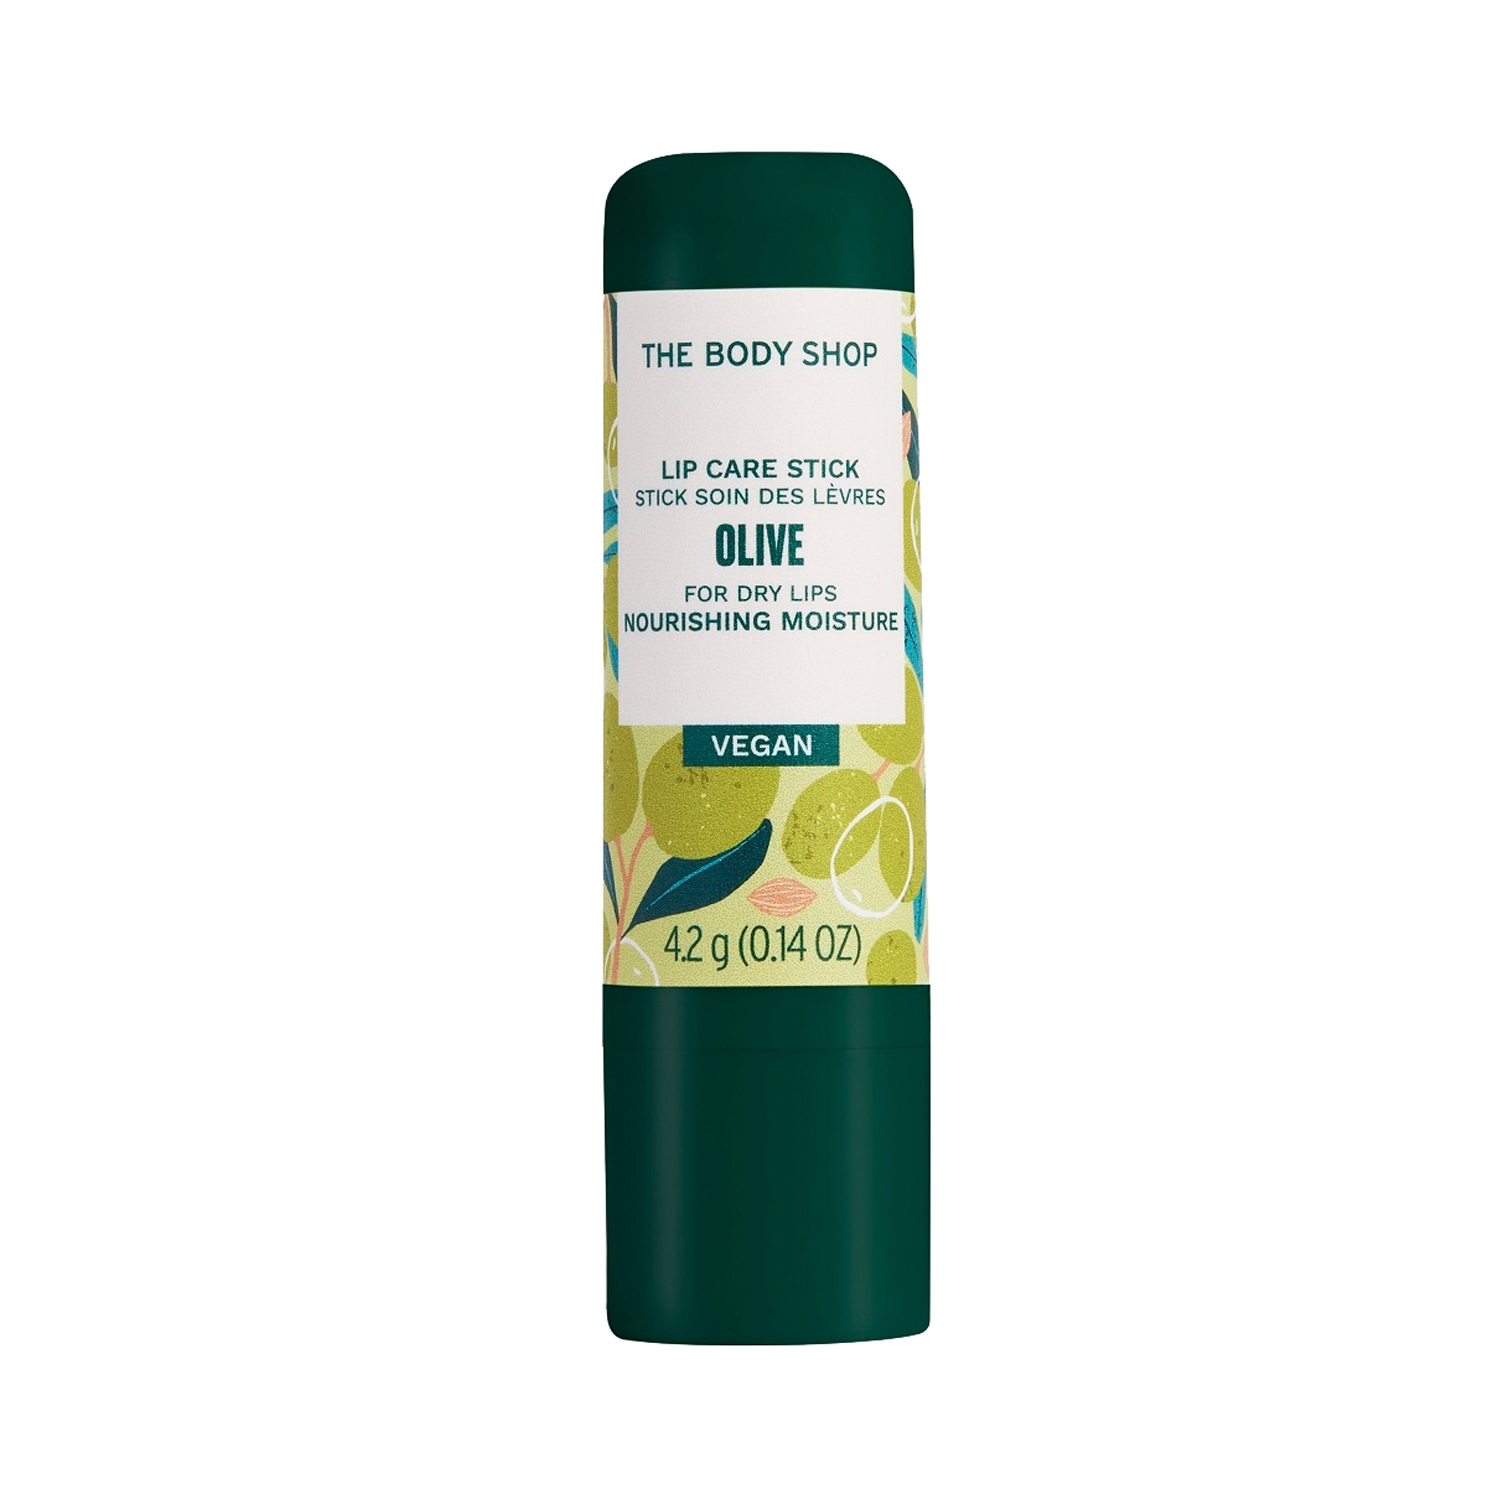 The Body Shop | The Body Shop Olive Lip Care Stick (4.2g)